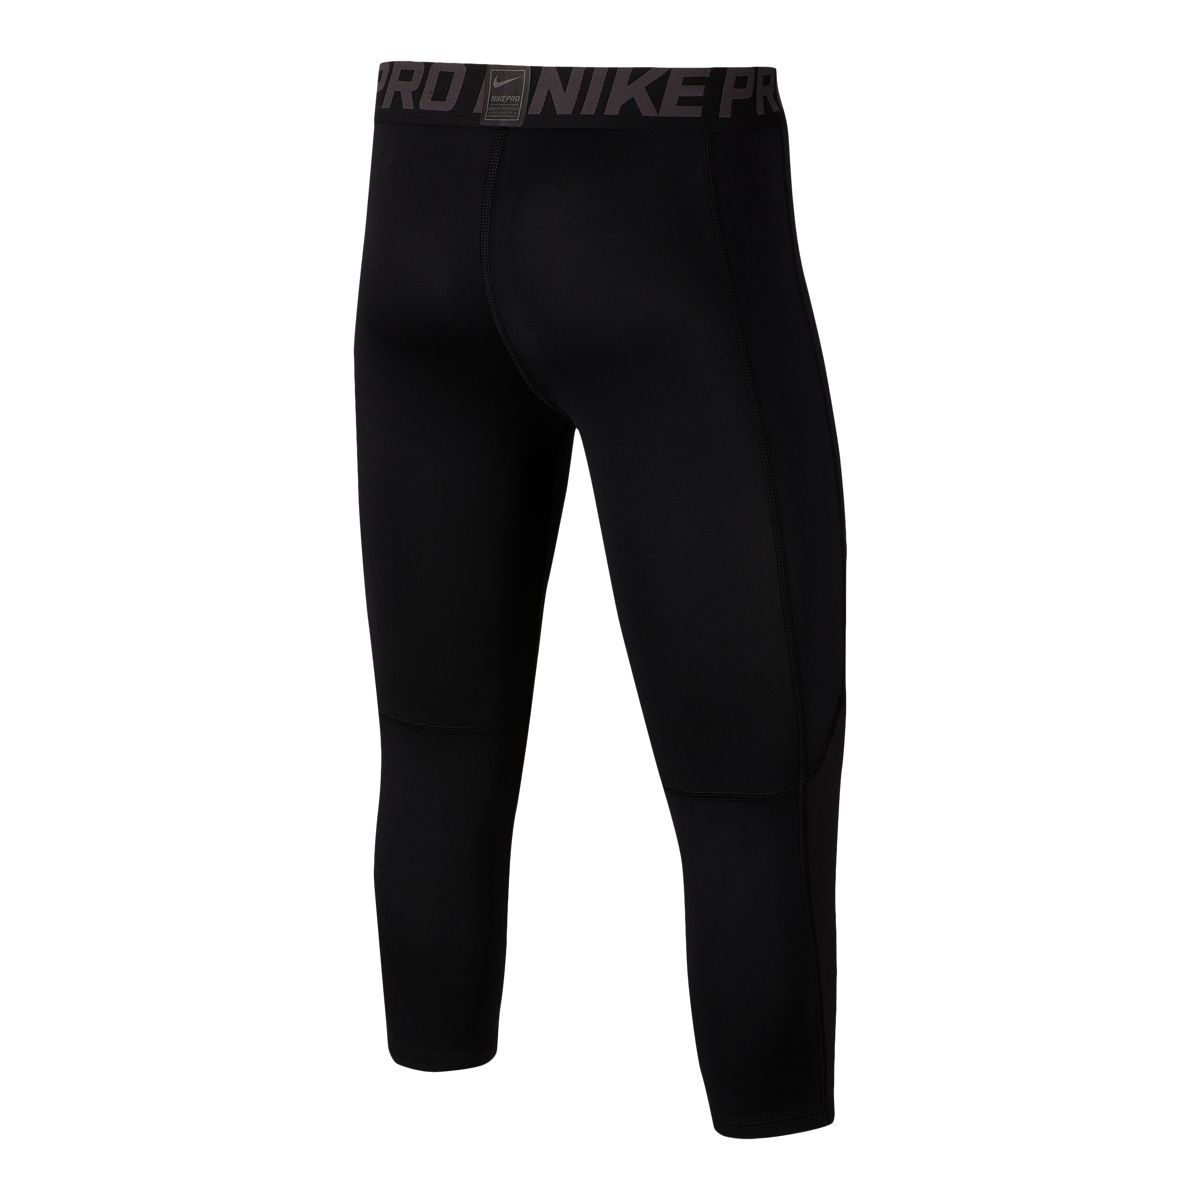 Nike Mens Football Pants Pro Combat Sports Compression Shorts